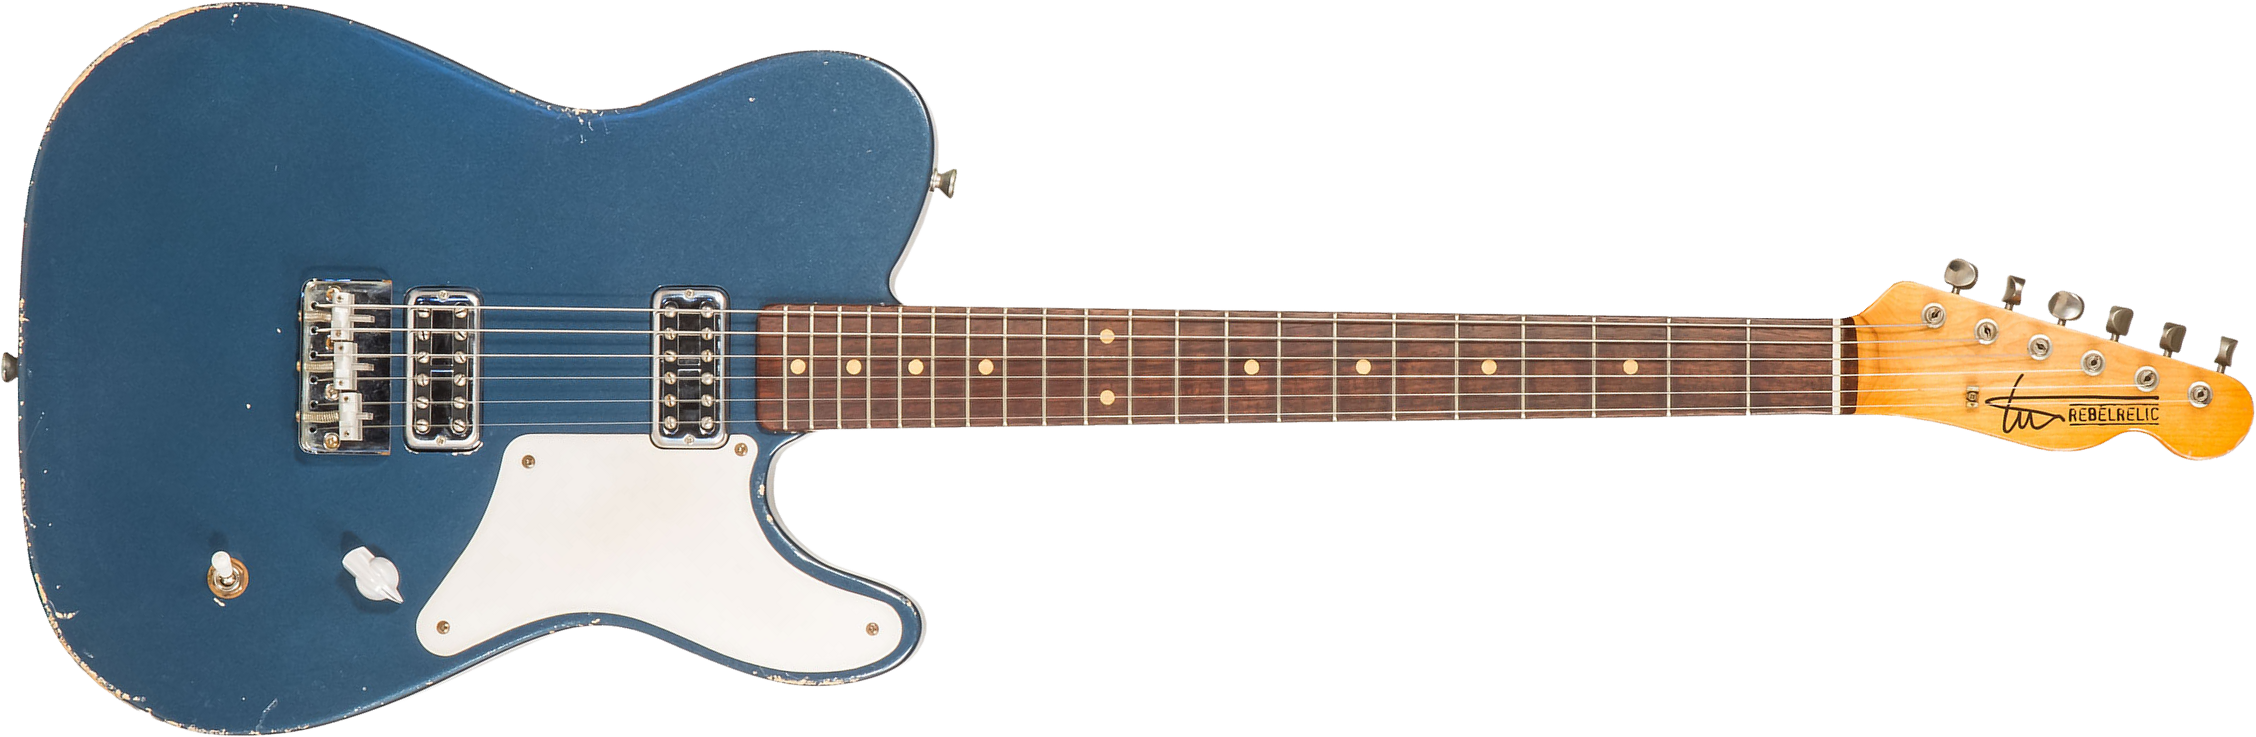 Rebelrelic Carmelita 2h Tv Jones Ht Rw #62165 - Medium Aged Lake Placid Blue - Televorm elektrische gitaar - Main picture